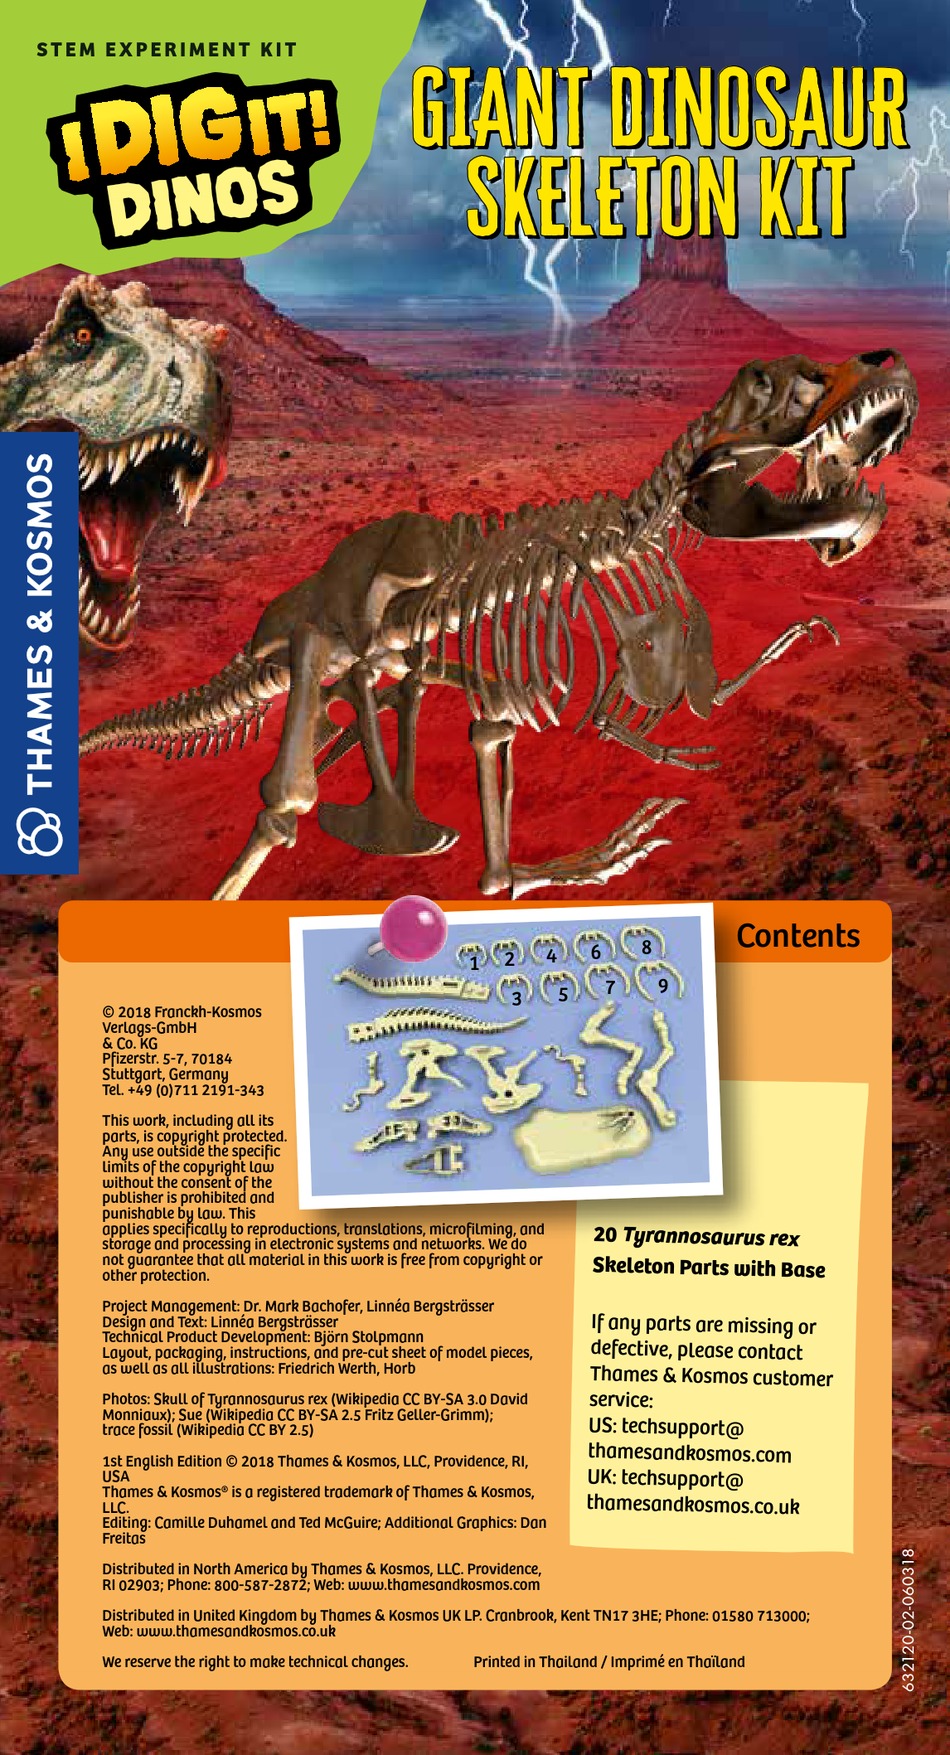 Giant Dinosaur Skeleton Kit I Dig It Dinos Build A T Rex Thames Kosmos 632120 